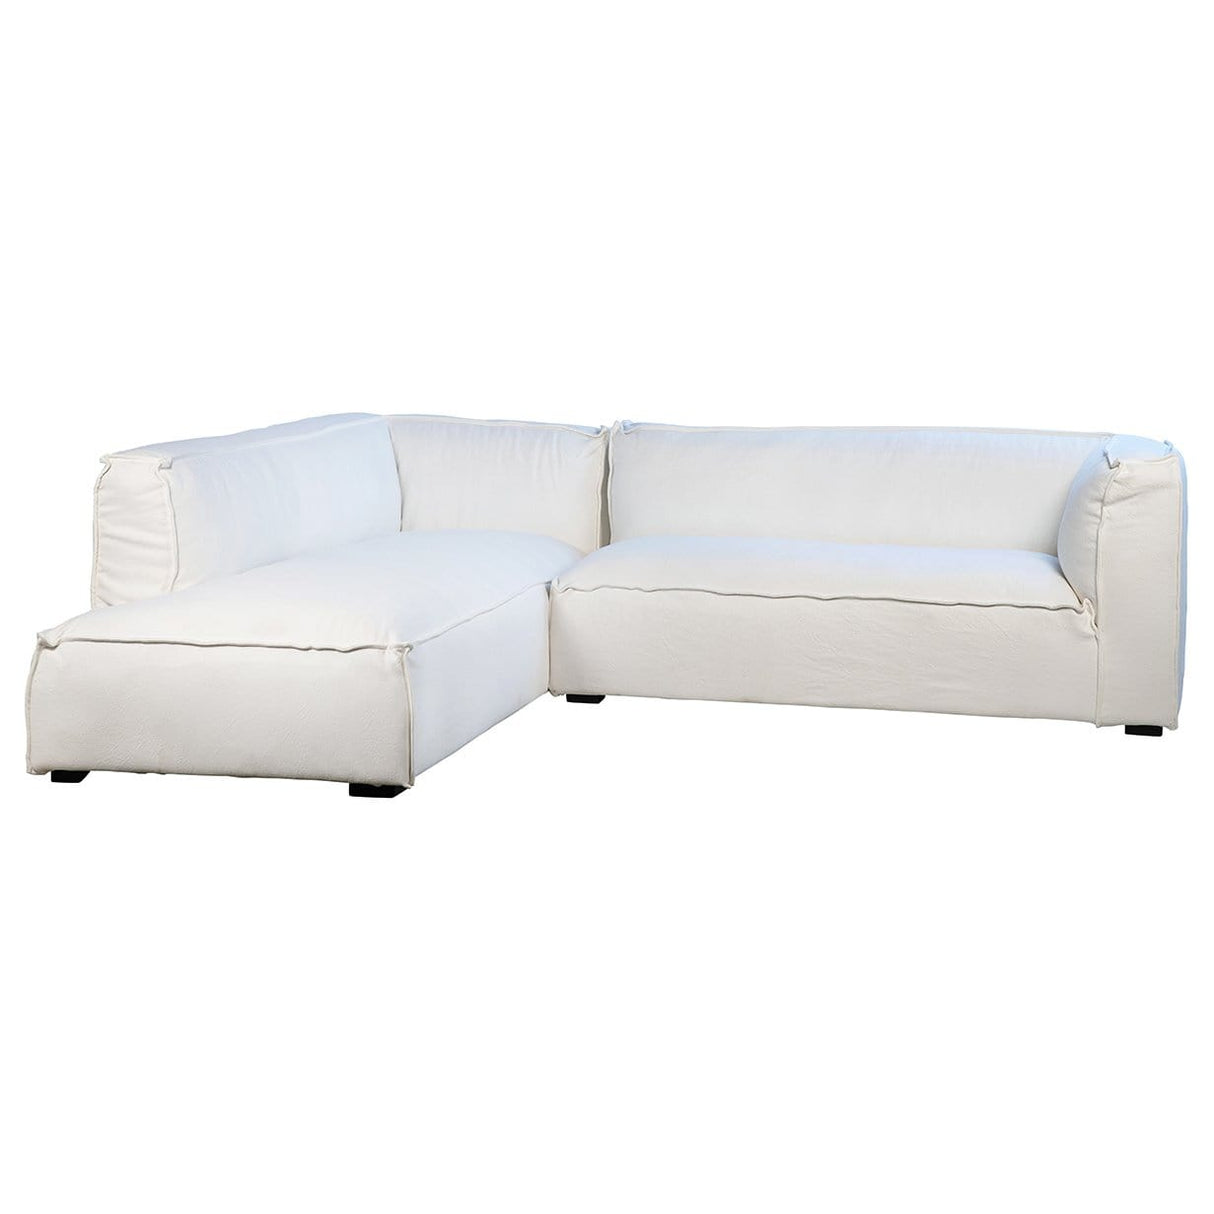 Dovetail Basford Sofa Furniture dovetail-DOV4538